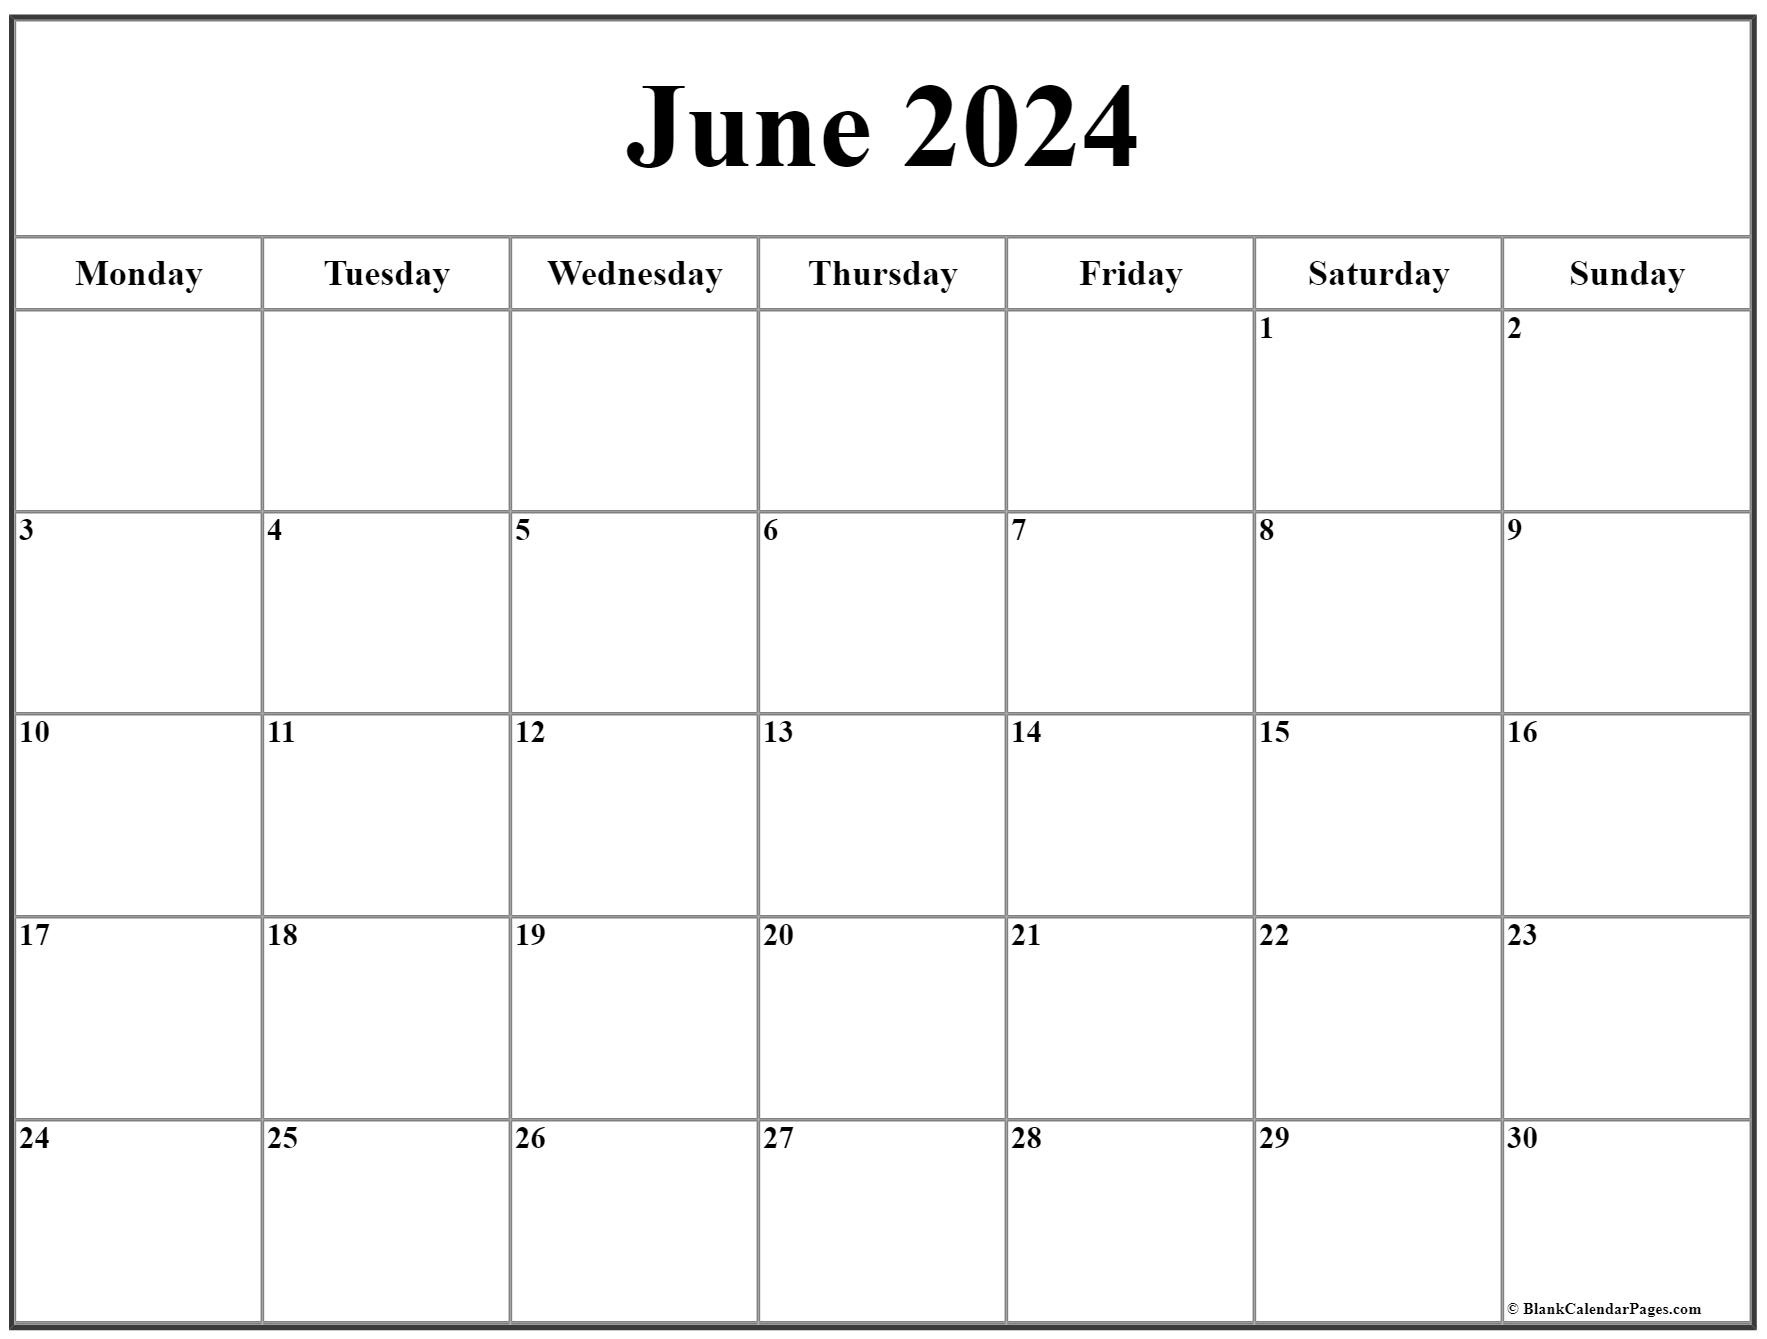 June 2024 Monday Calendar | Monday To Sunday in June 2024 Weekly Calendar